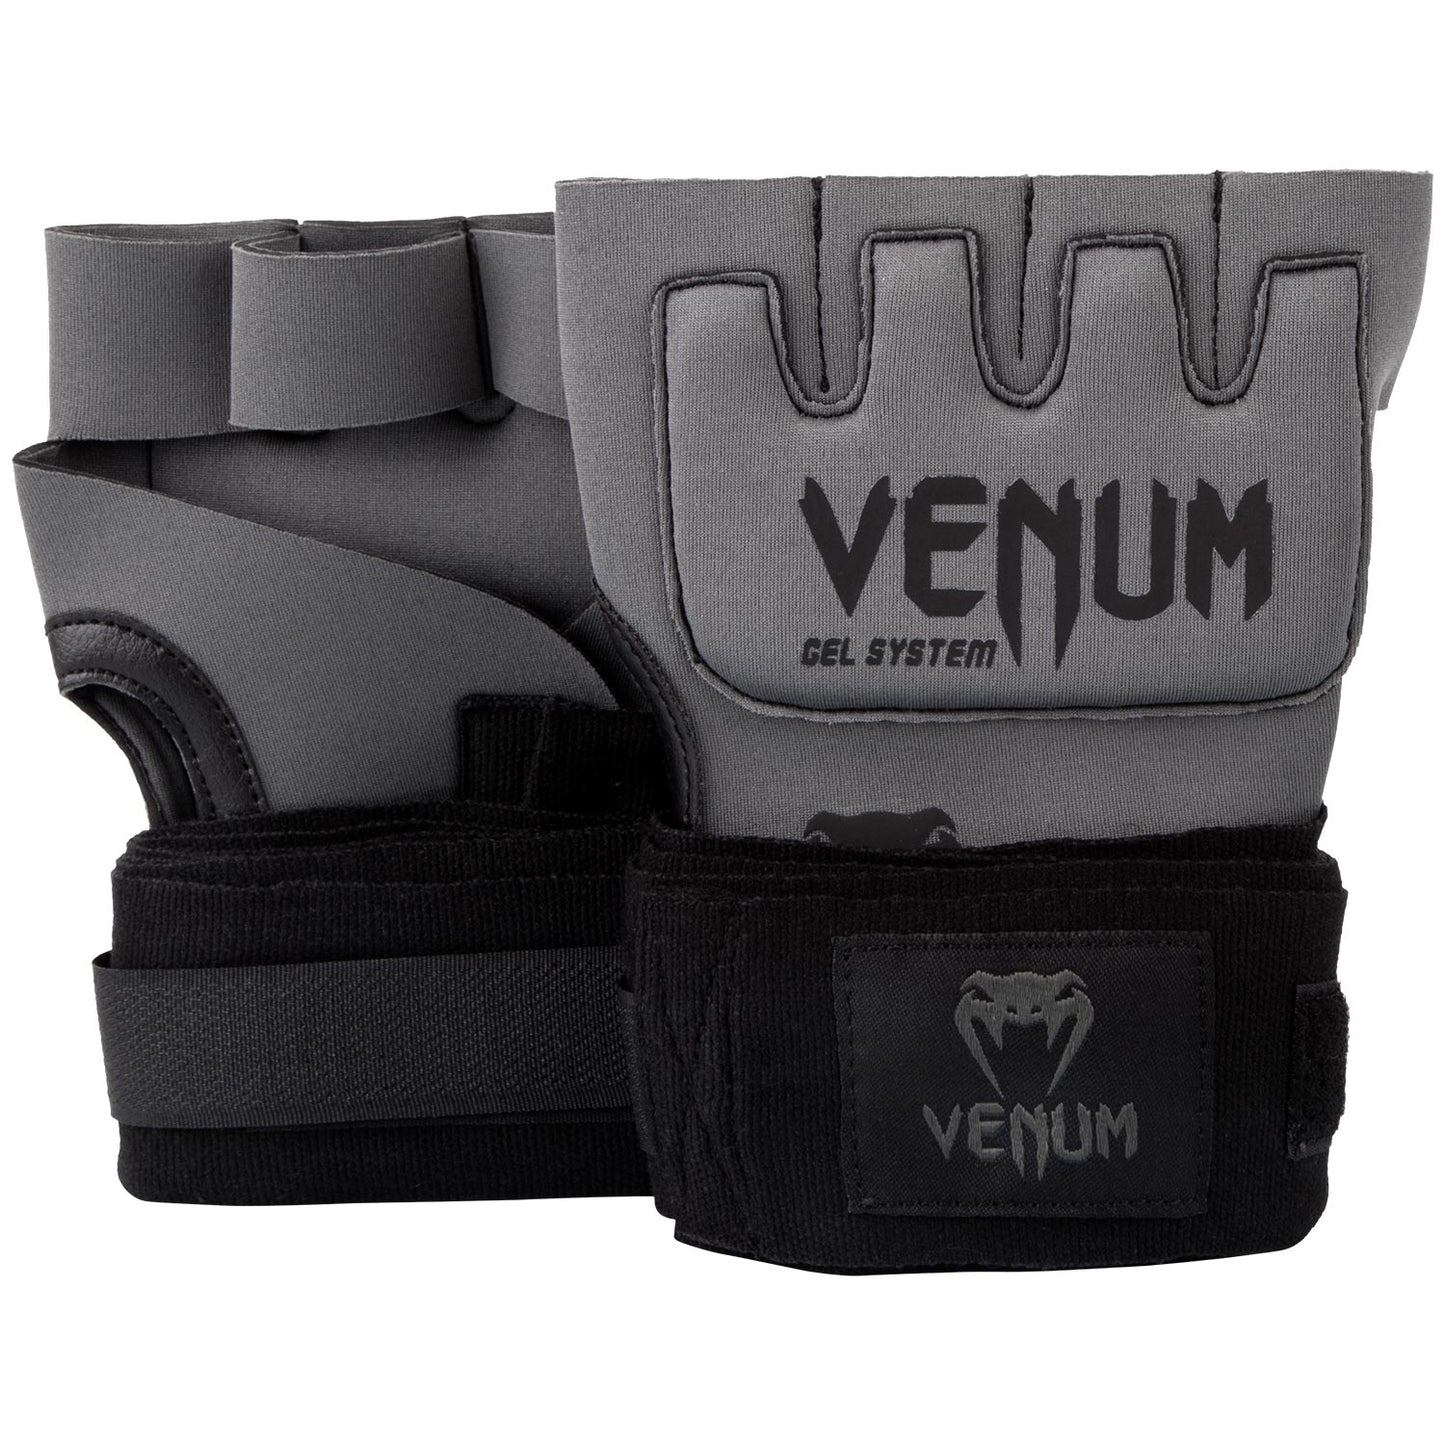 Venum Kontact Gel Glove Wraps - Grey/Black